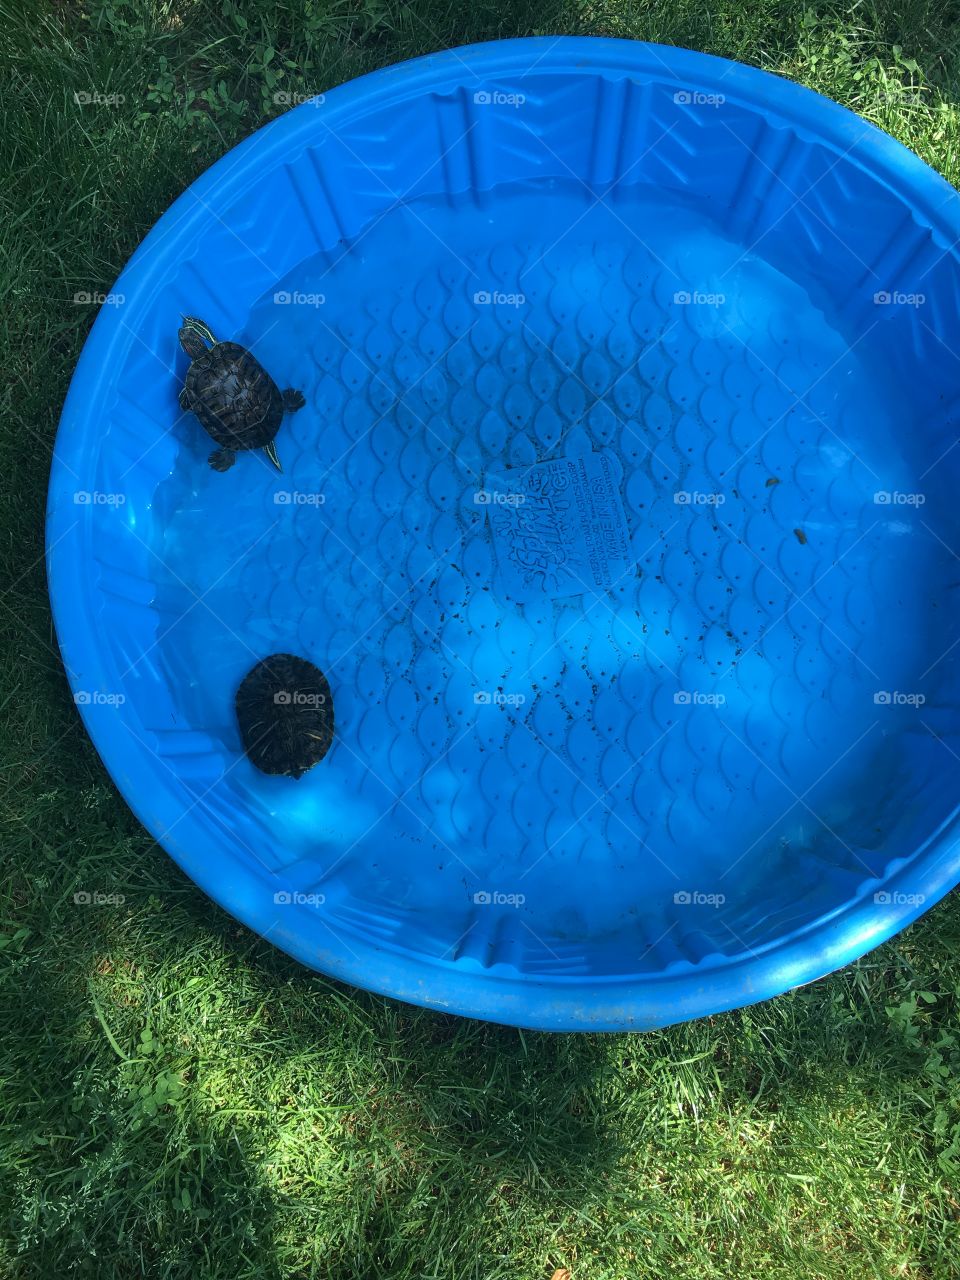 Turtles in a blue pool